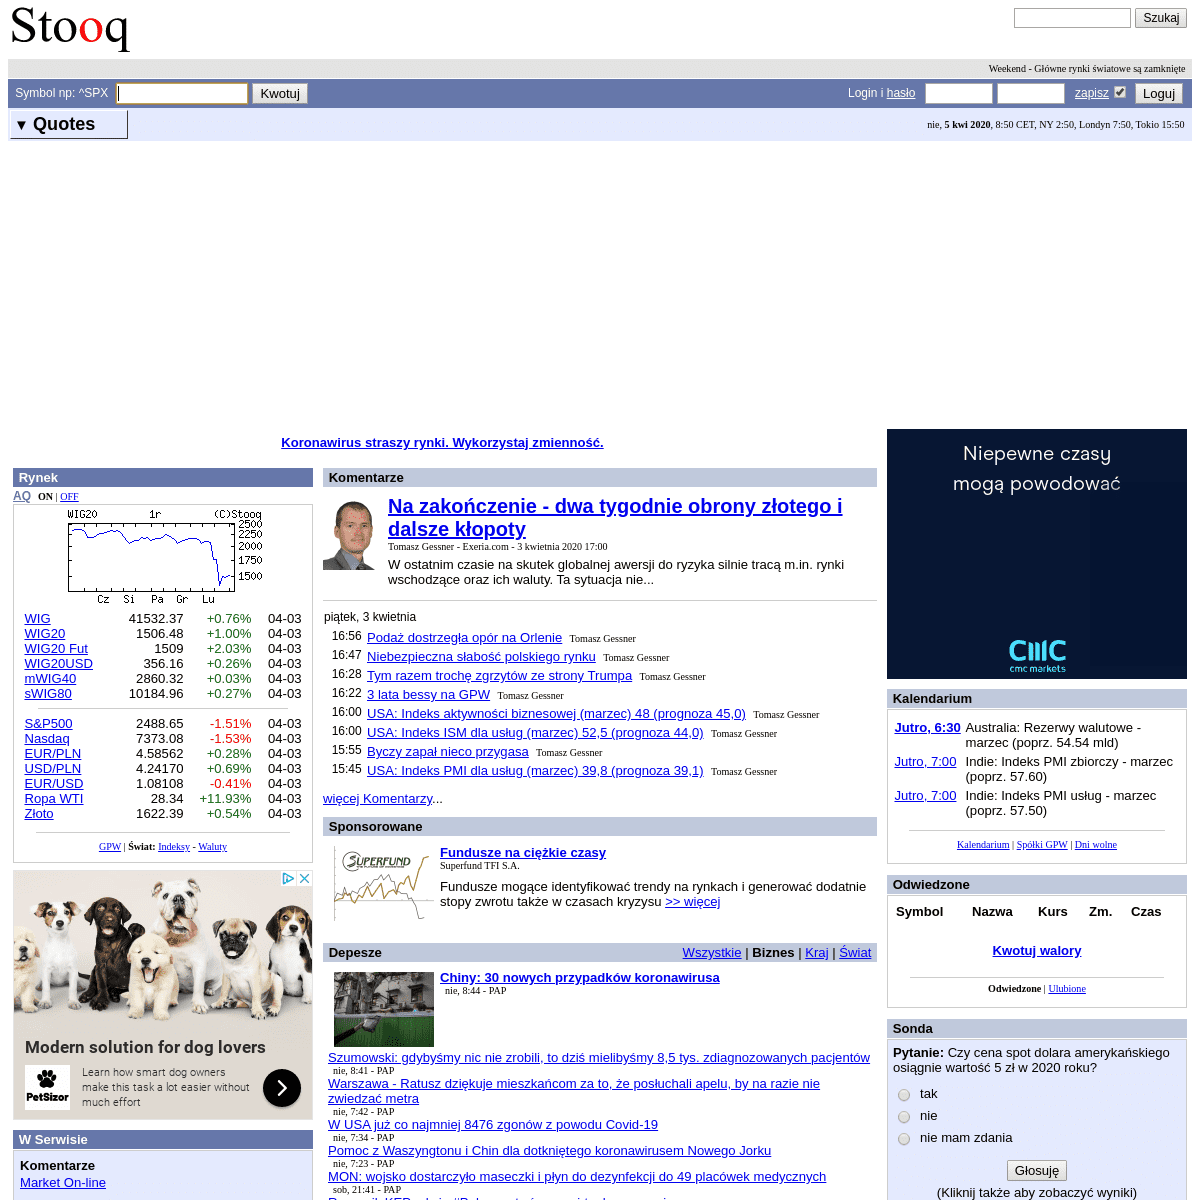 A complete backup of stooq.com